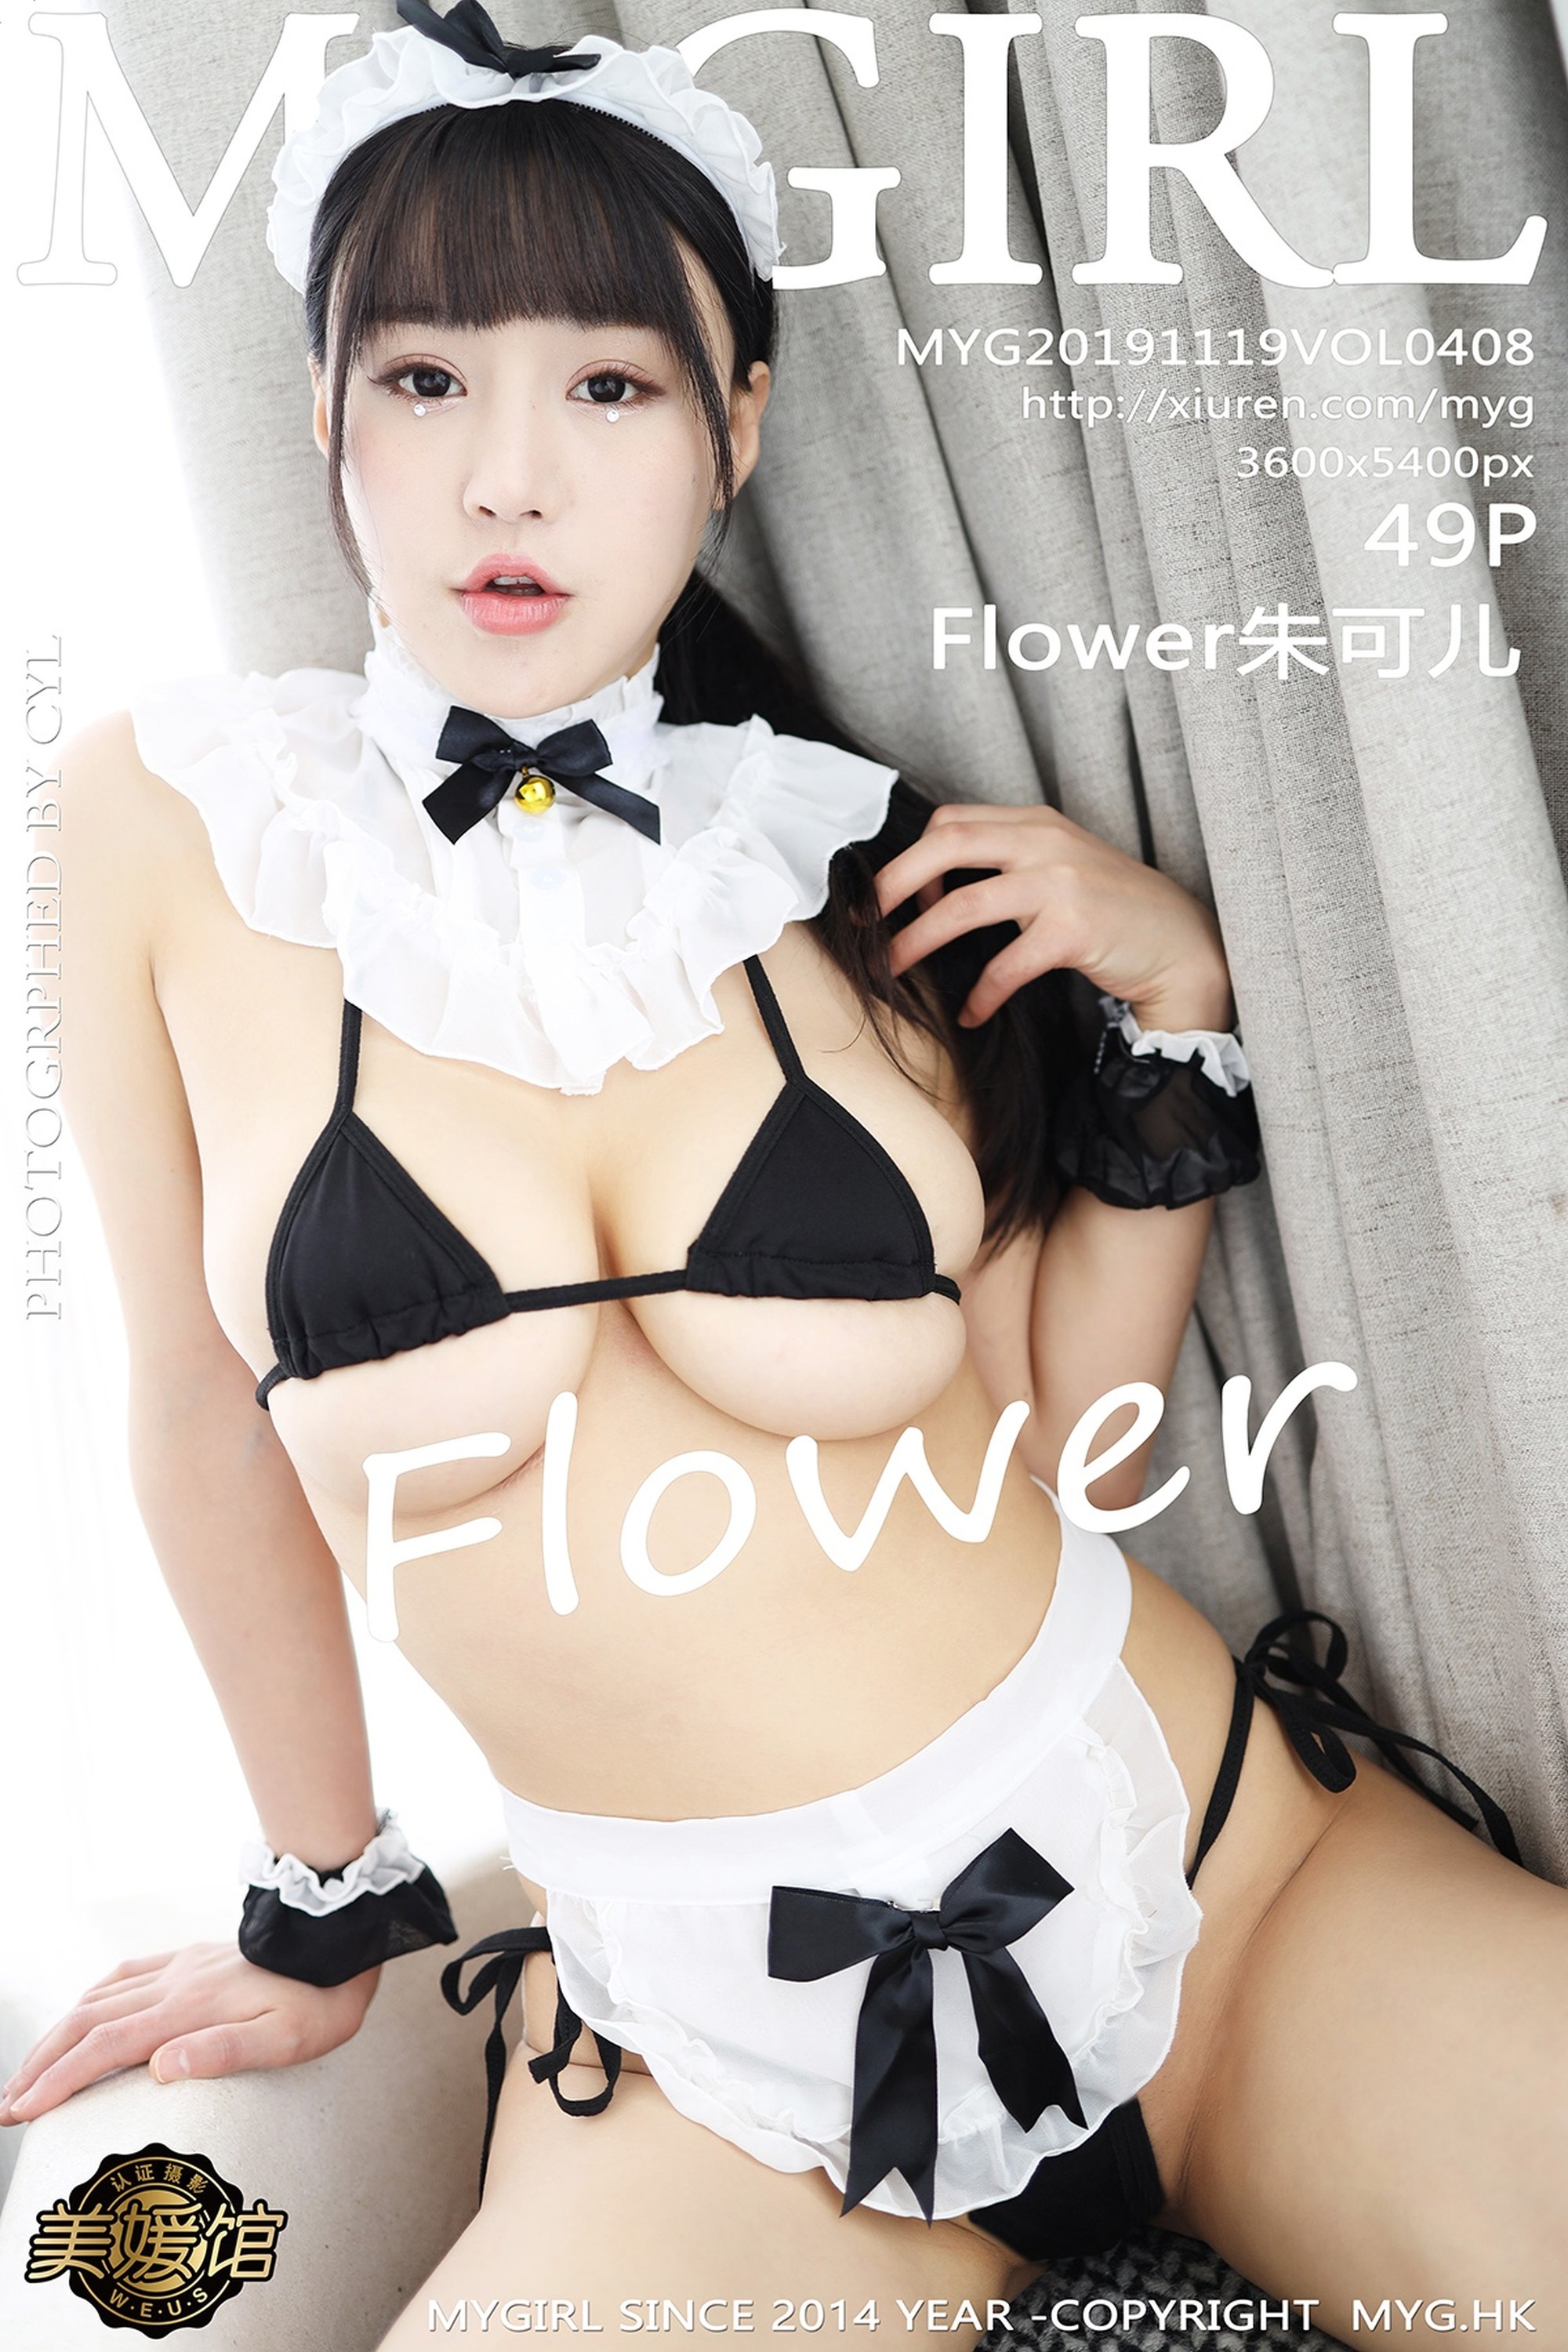 【MyGirl美媛館系列】2019.11.19 VOL.408 Flower朱可兒 性感寫真【52P】 - 貼圖 - 絲襪美腿 -